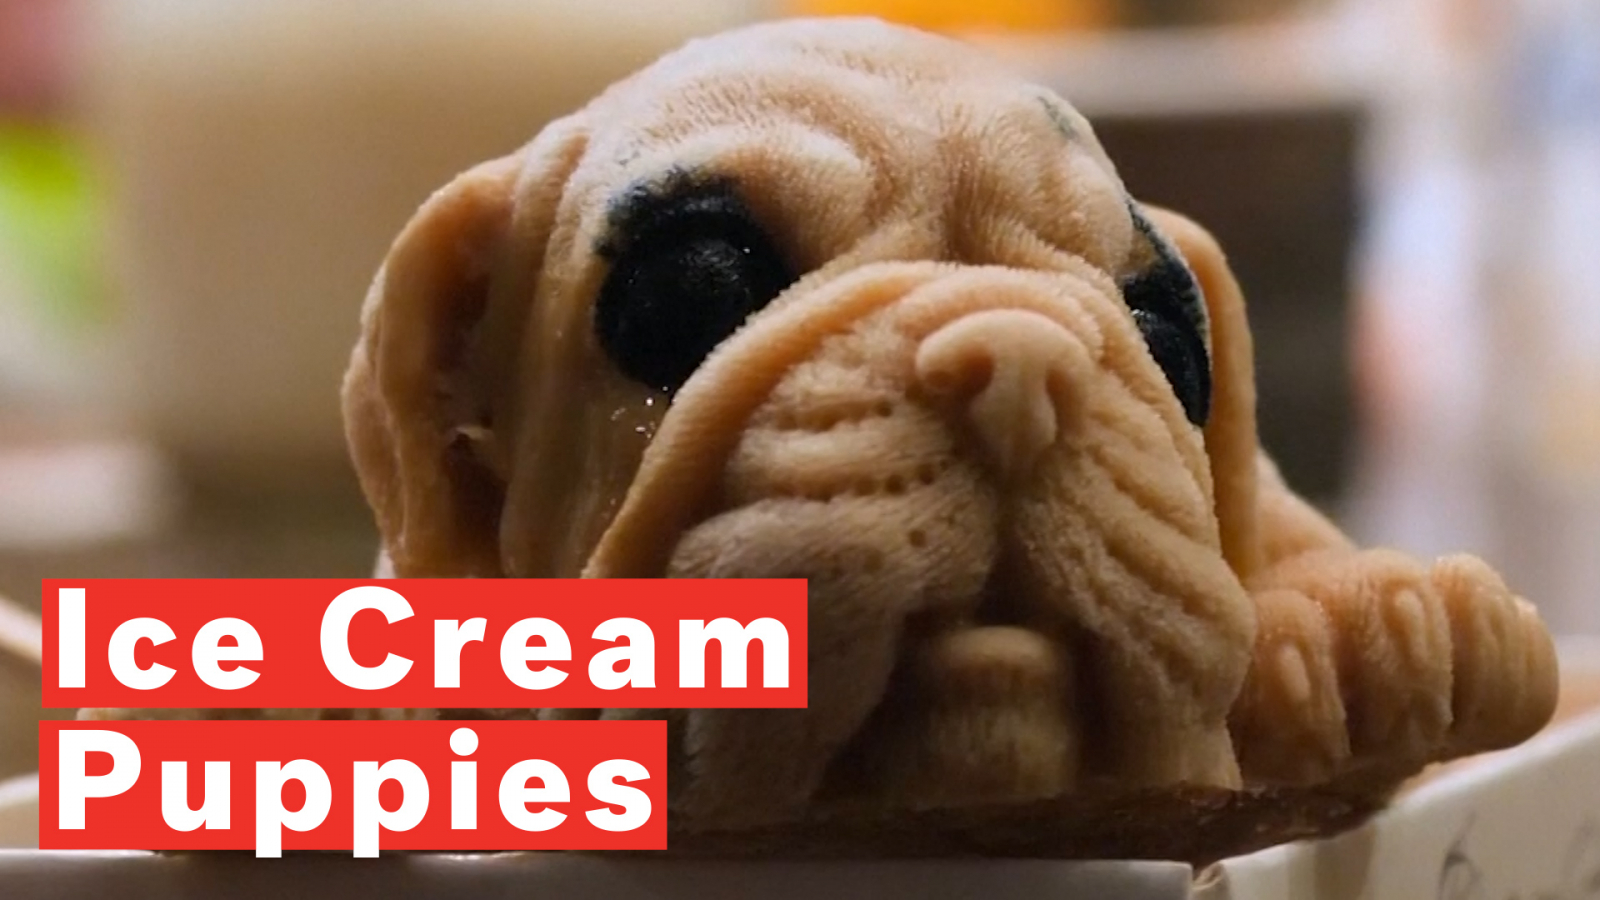 Bullmastiff Puppies For Sale Craigslist - PetsWall